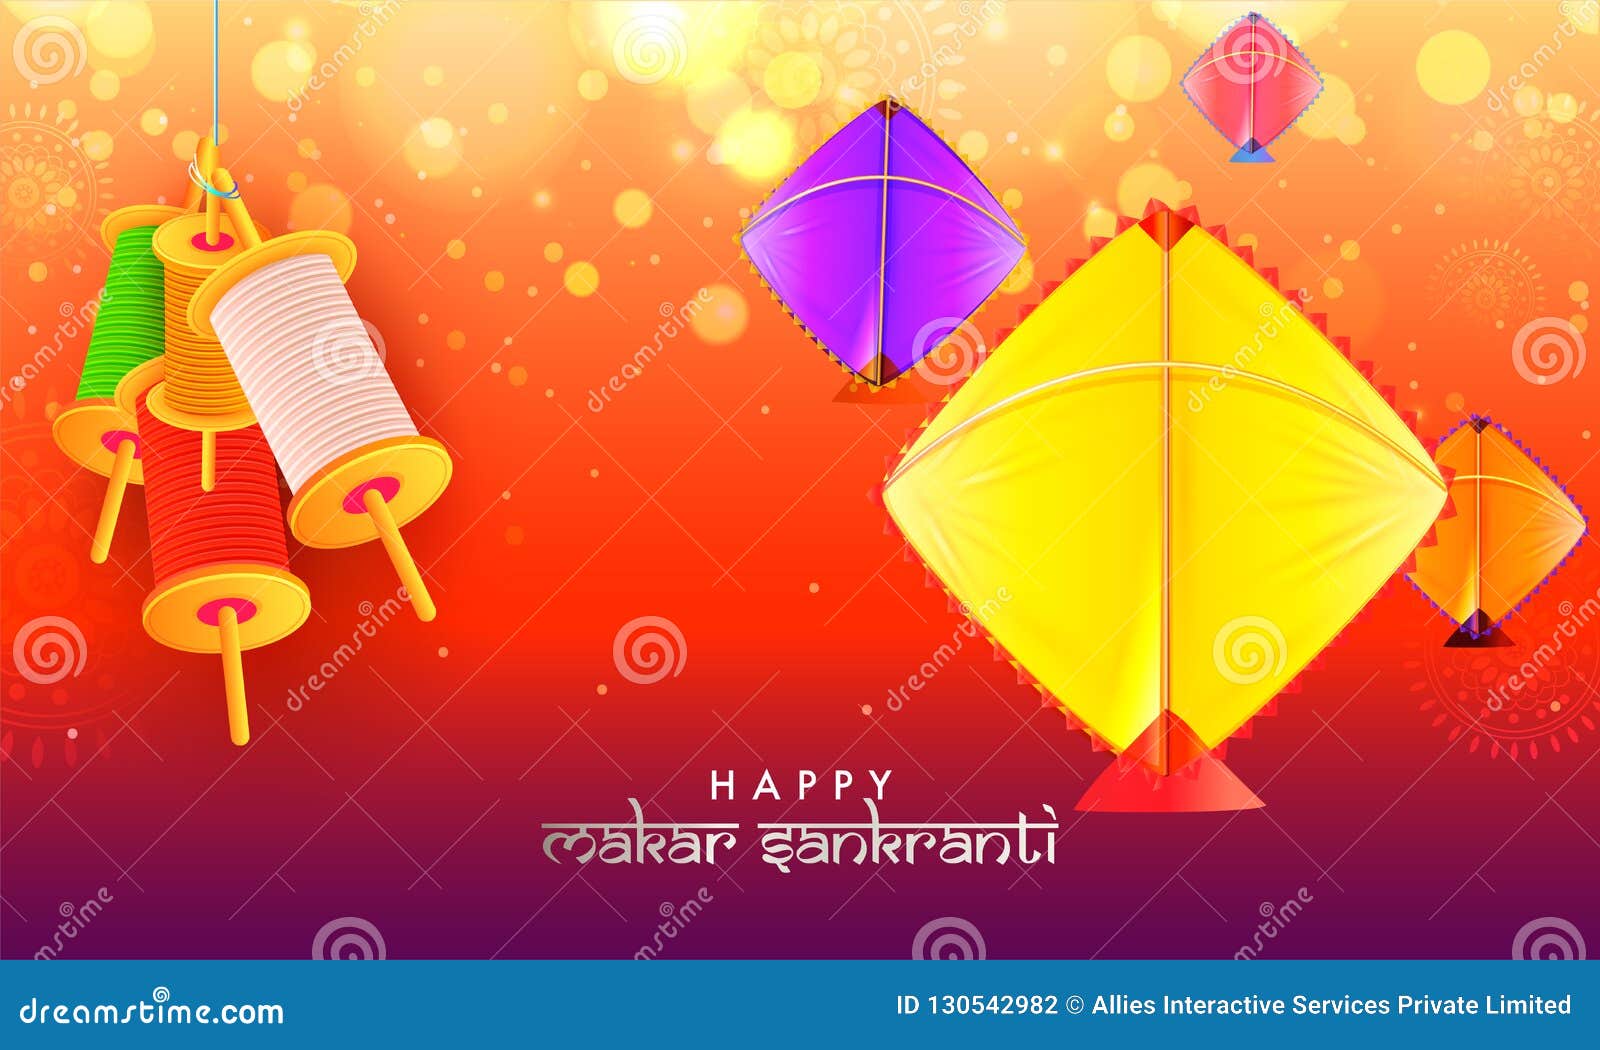 Colorful Kites and Spool Hang on Glossy Blurred Background Poster or Banner  Design for Makar Sankranti Celebration. Stock Illustration - Illustration  of festival, happy: 130542982